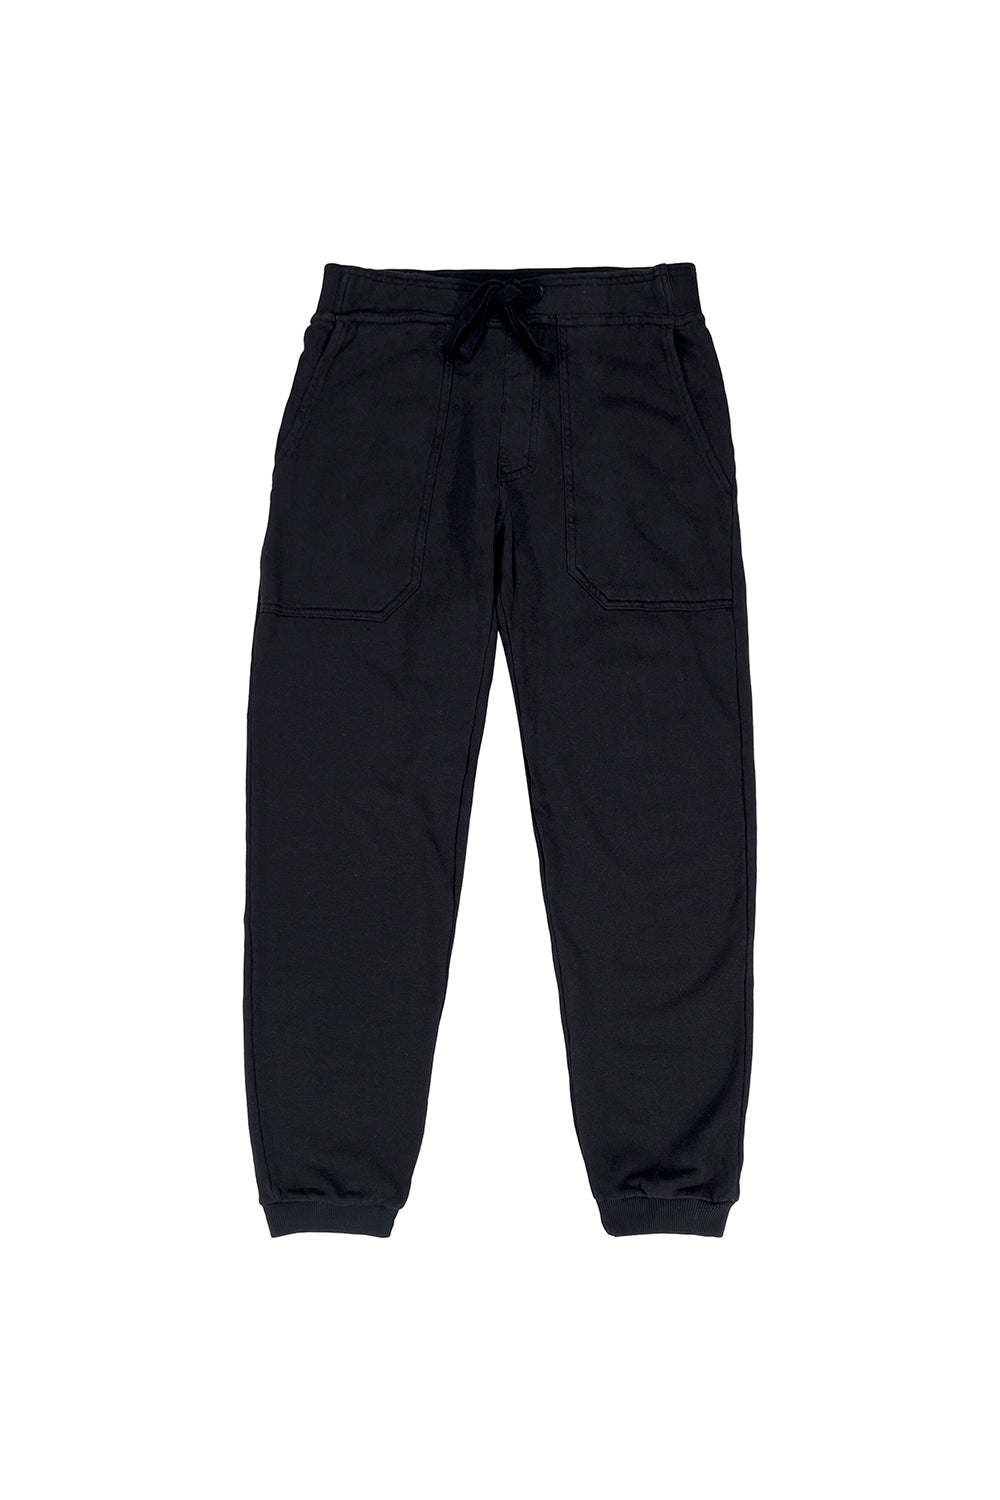 Rockaway Sweatpant | Jungmaven Hemp Clothing & Accessories / Color: Black